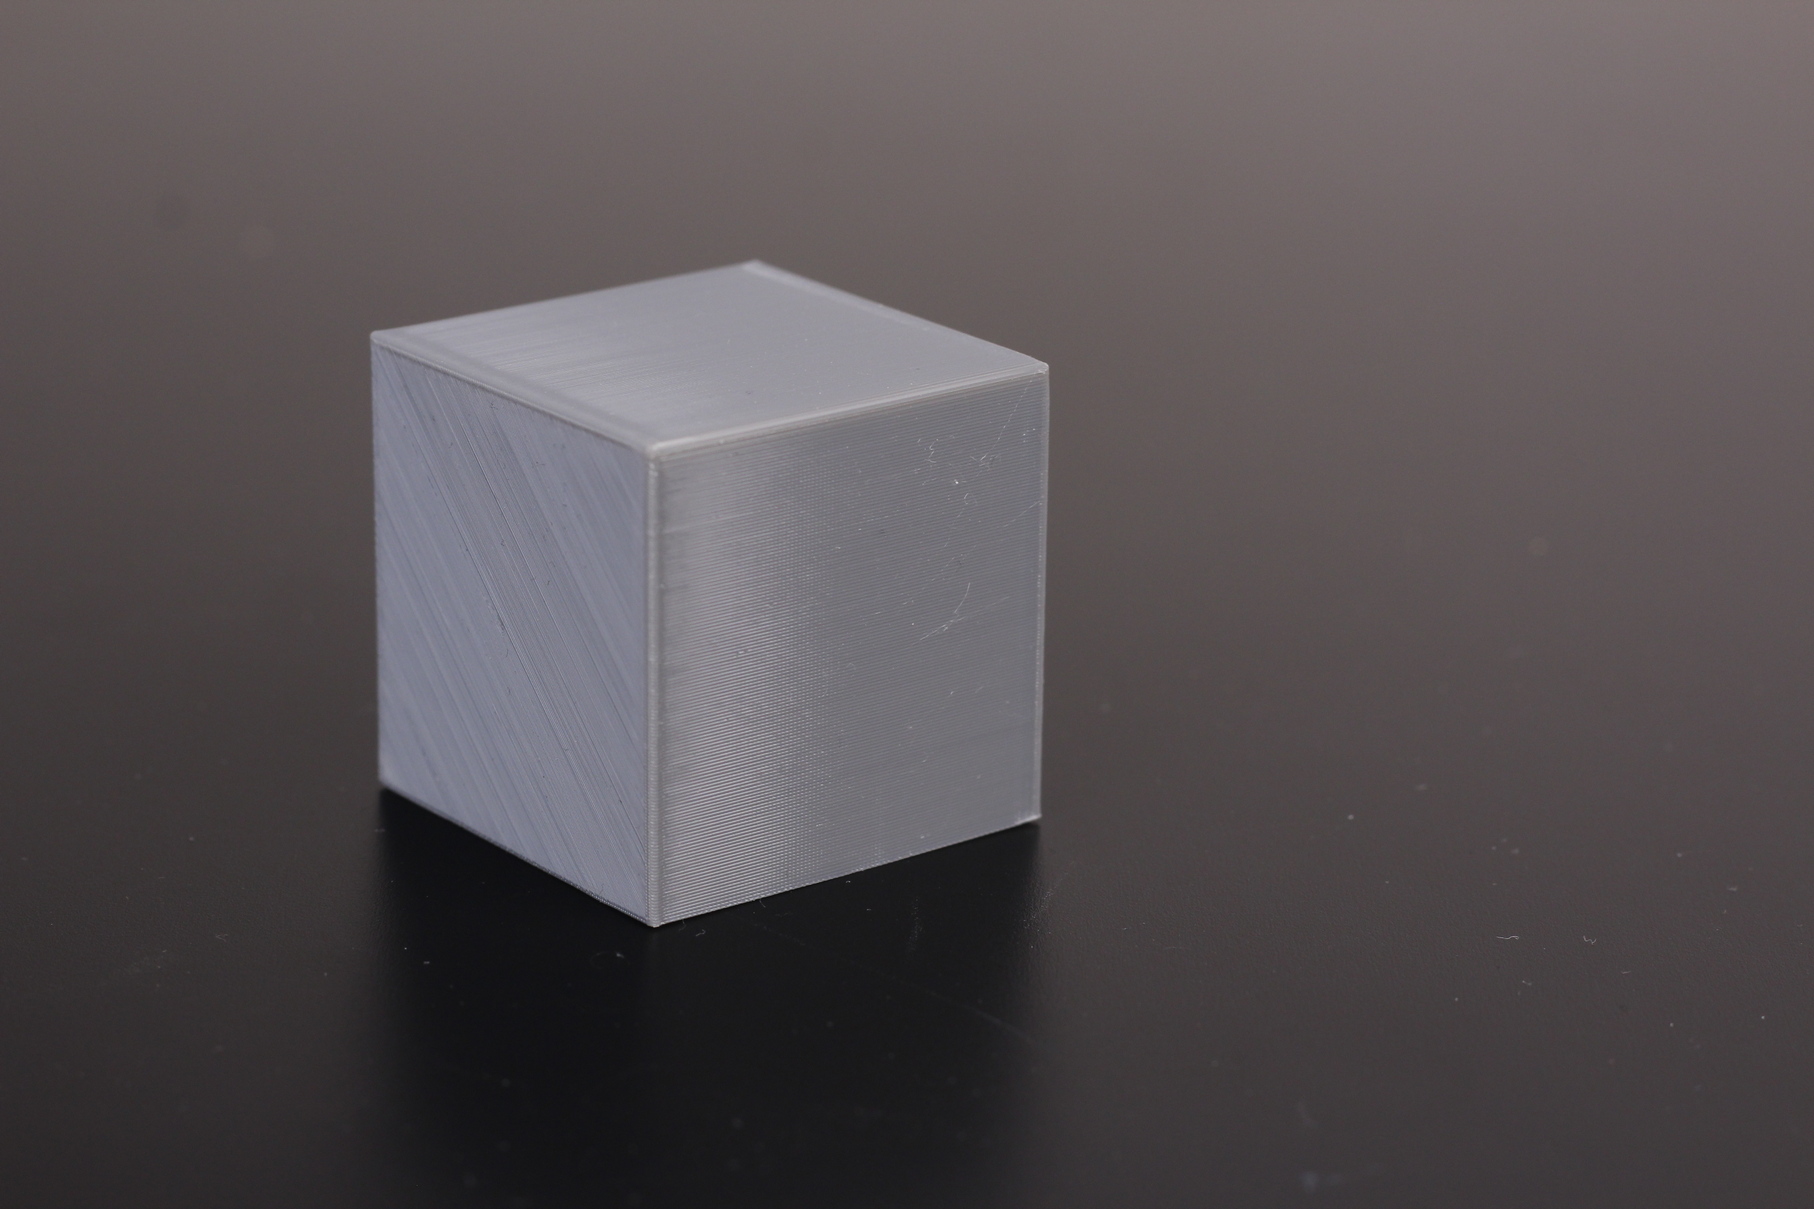 40x40 cube 3 | Creality 3DPrintMill (CR-30) Review: Belt Printer for Batch 3D Printing